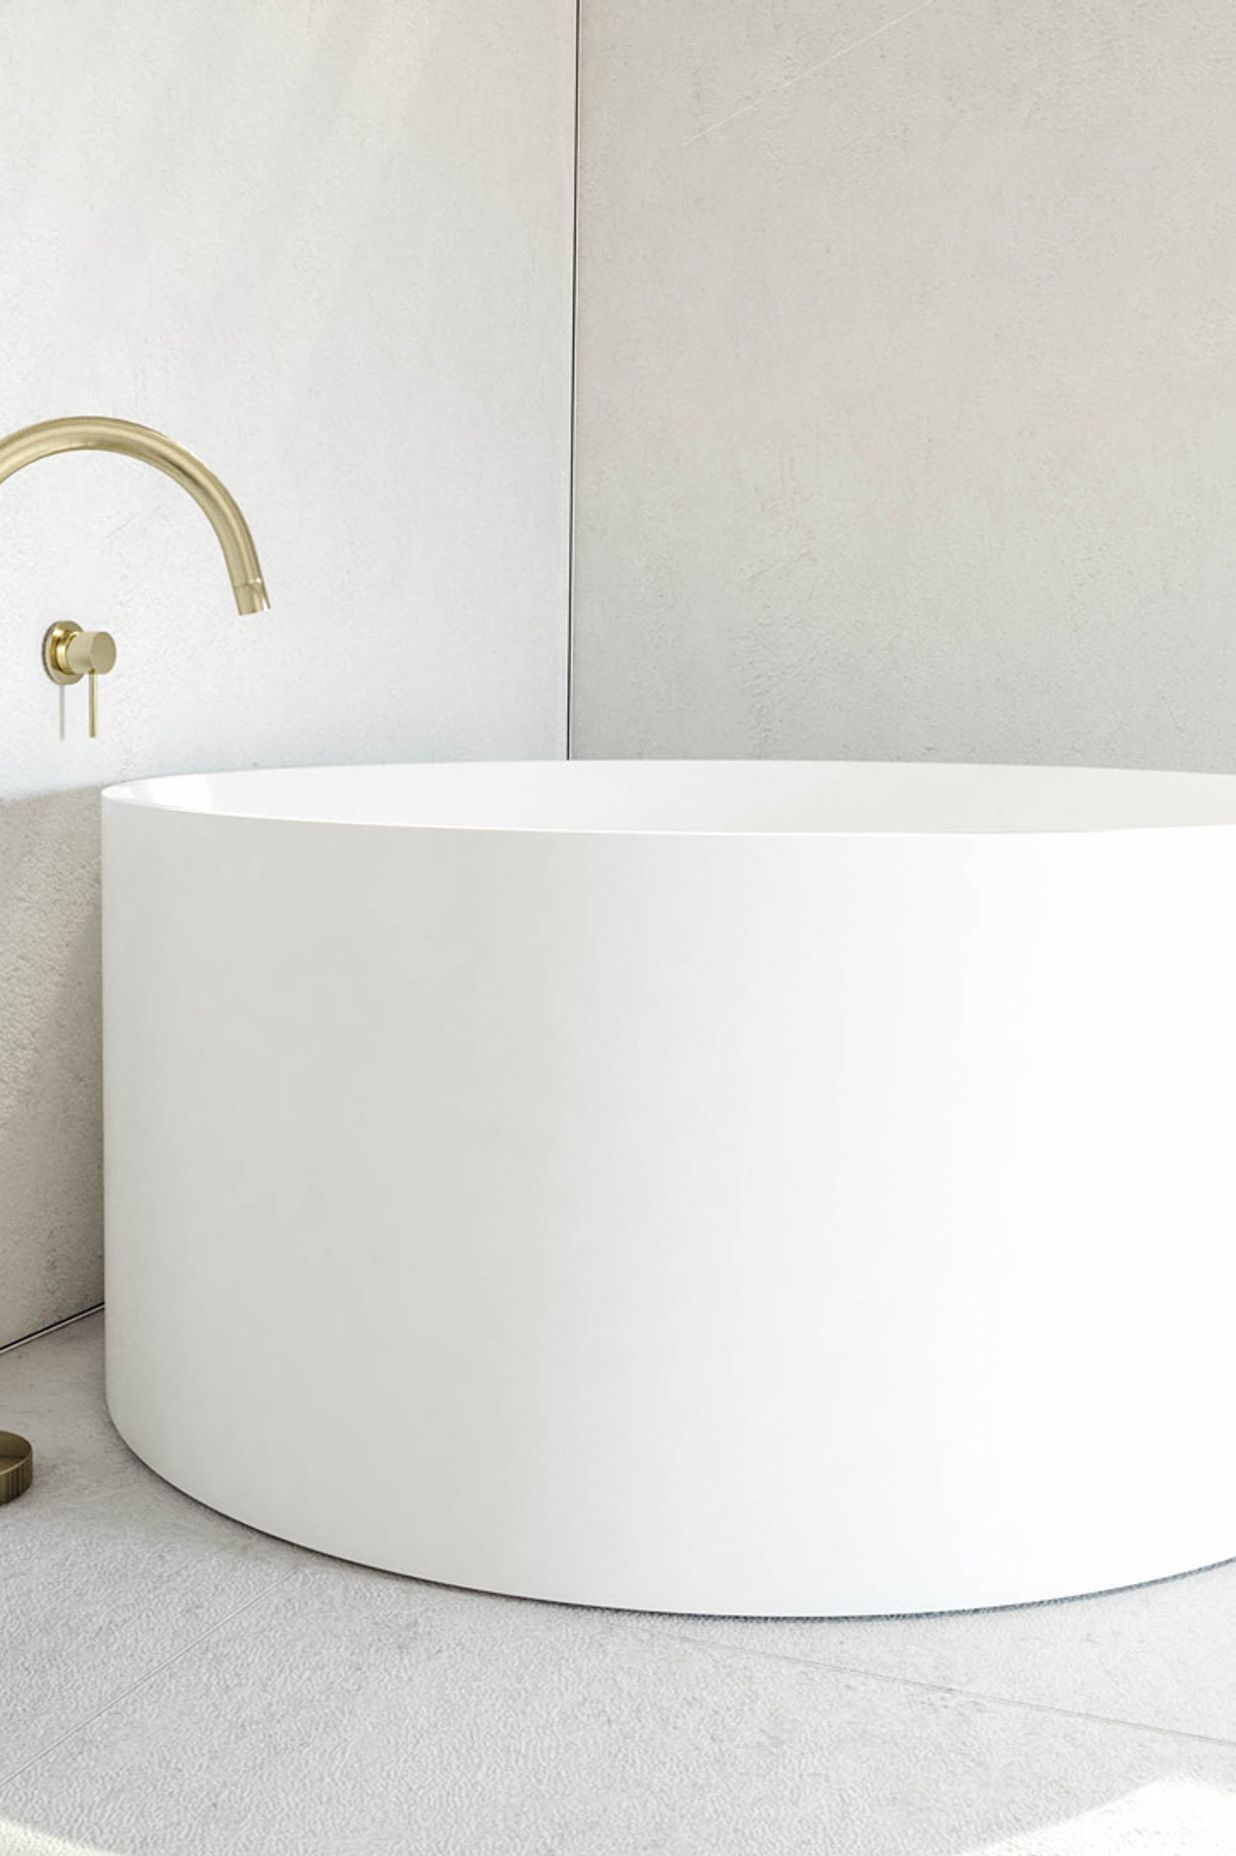 ABI Interiors - Oscar Floor Mounted Bath Filler